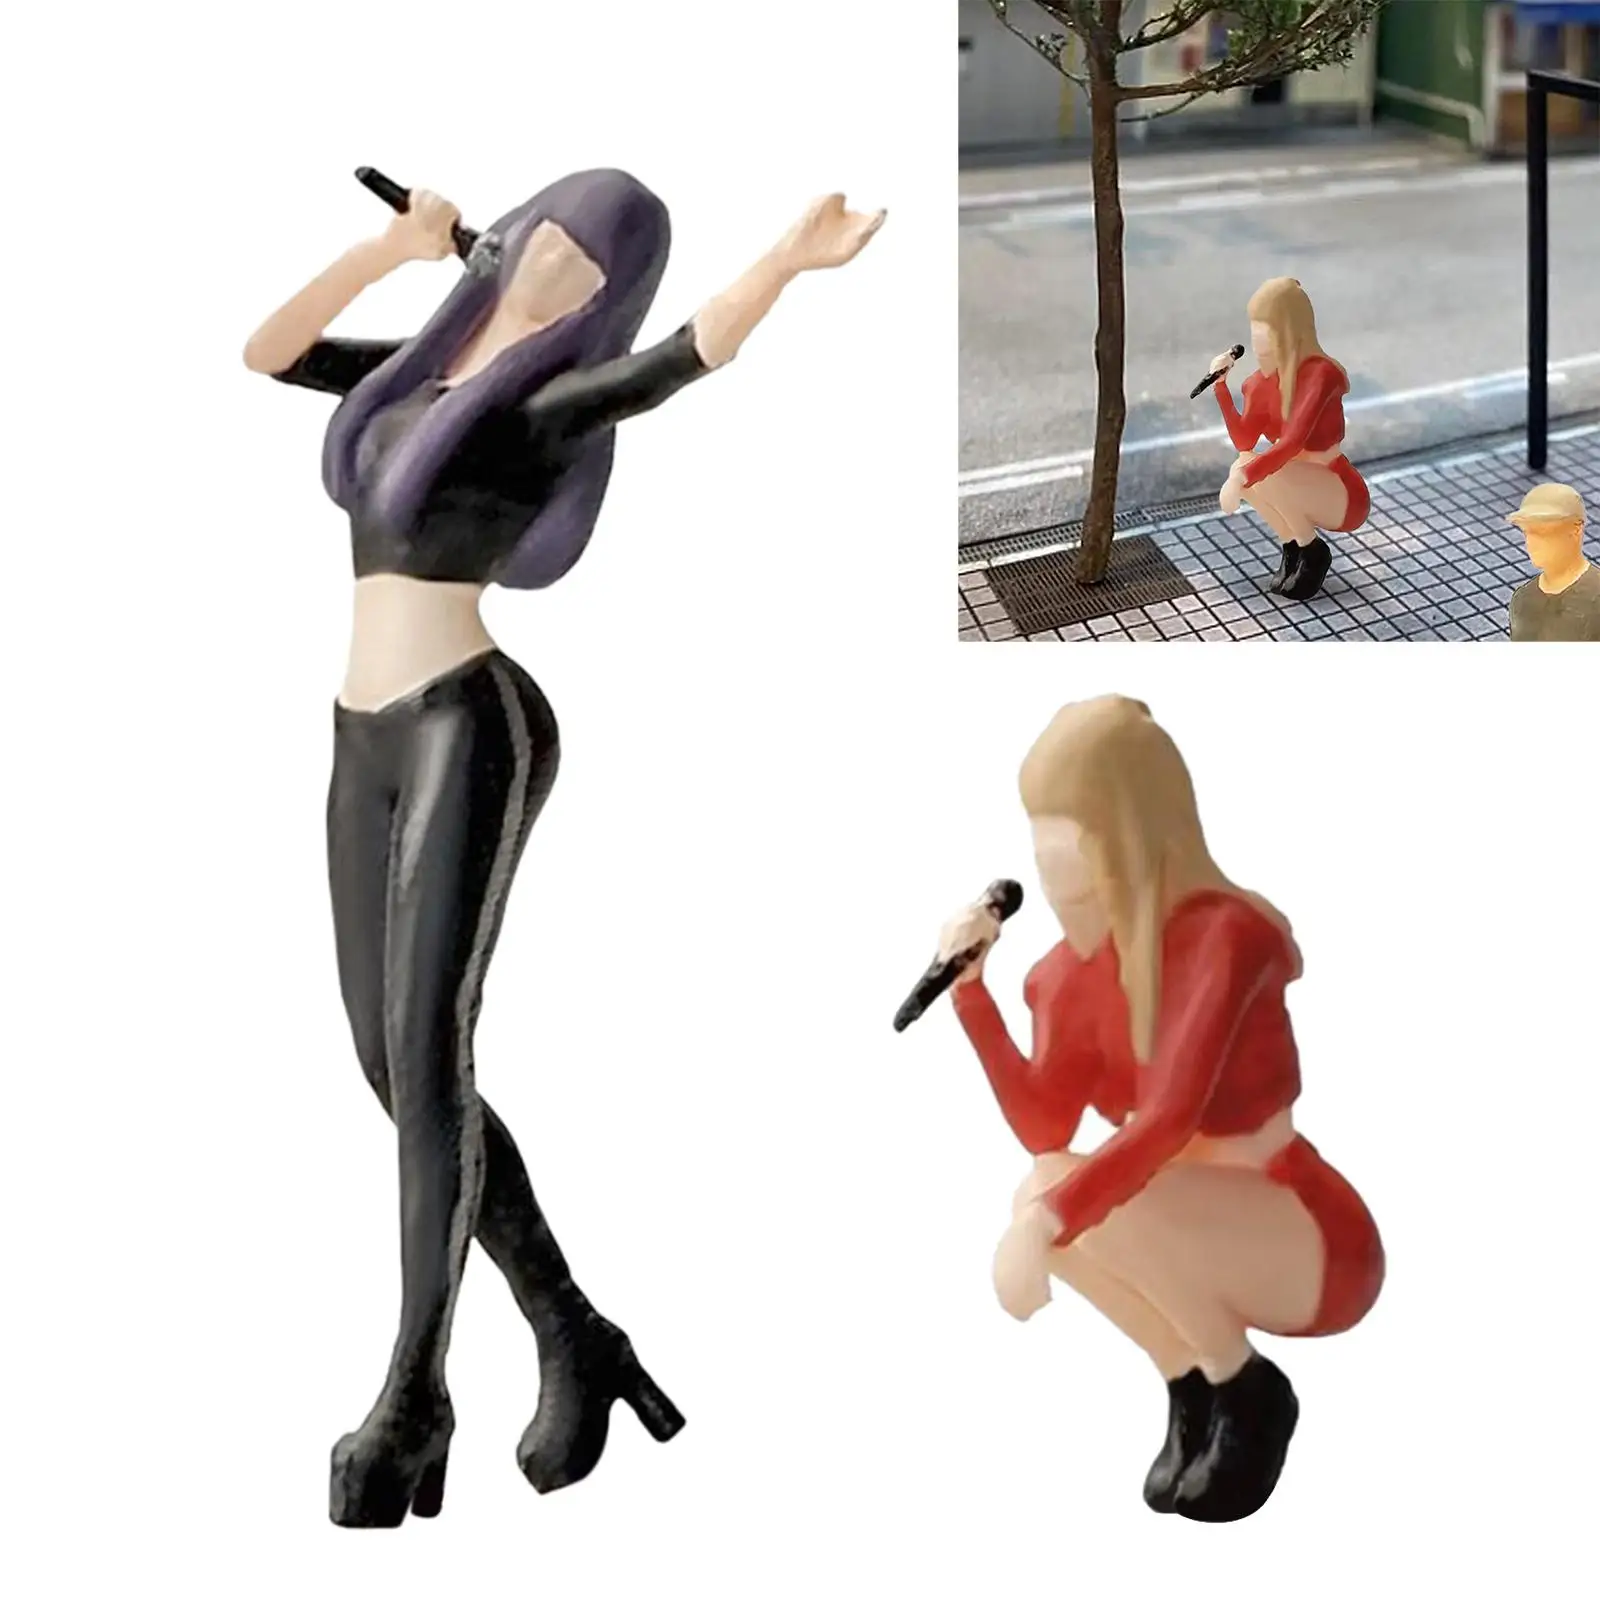 1/64 Scale Singer Model Figures Simulation Figurines Ornament Miniature Model Figures Diorama Layout Miniature Scenes Decor